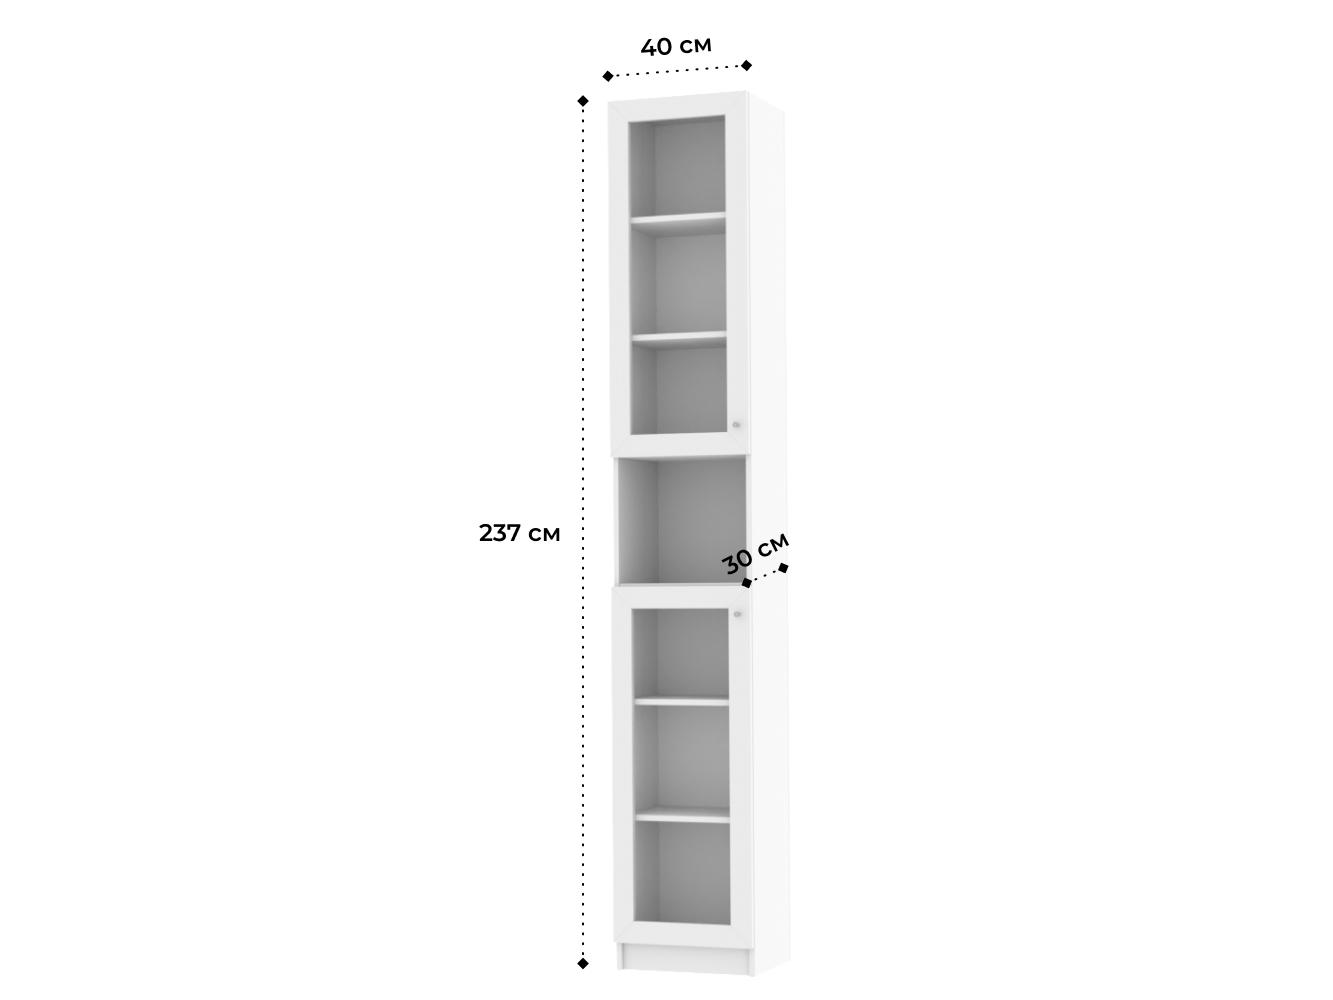  Книжный шкаф Билли 379 white ИКЕА (IKEA) изображение товара